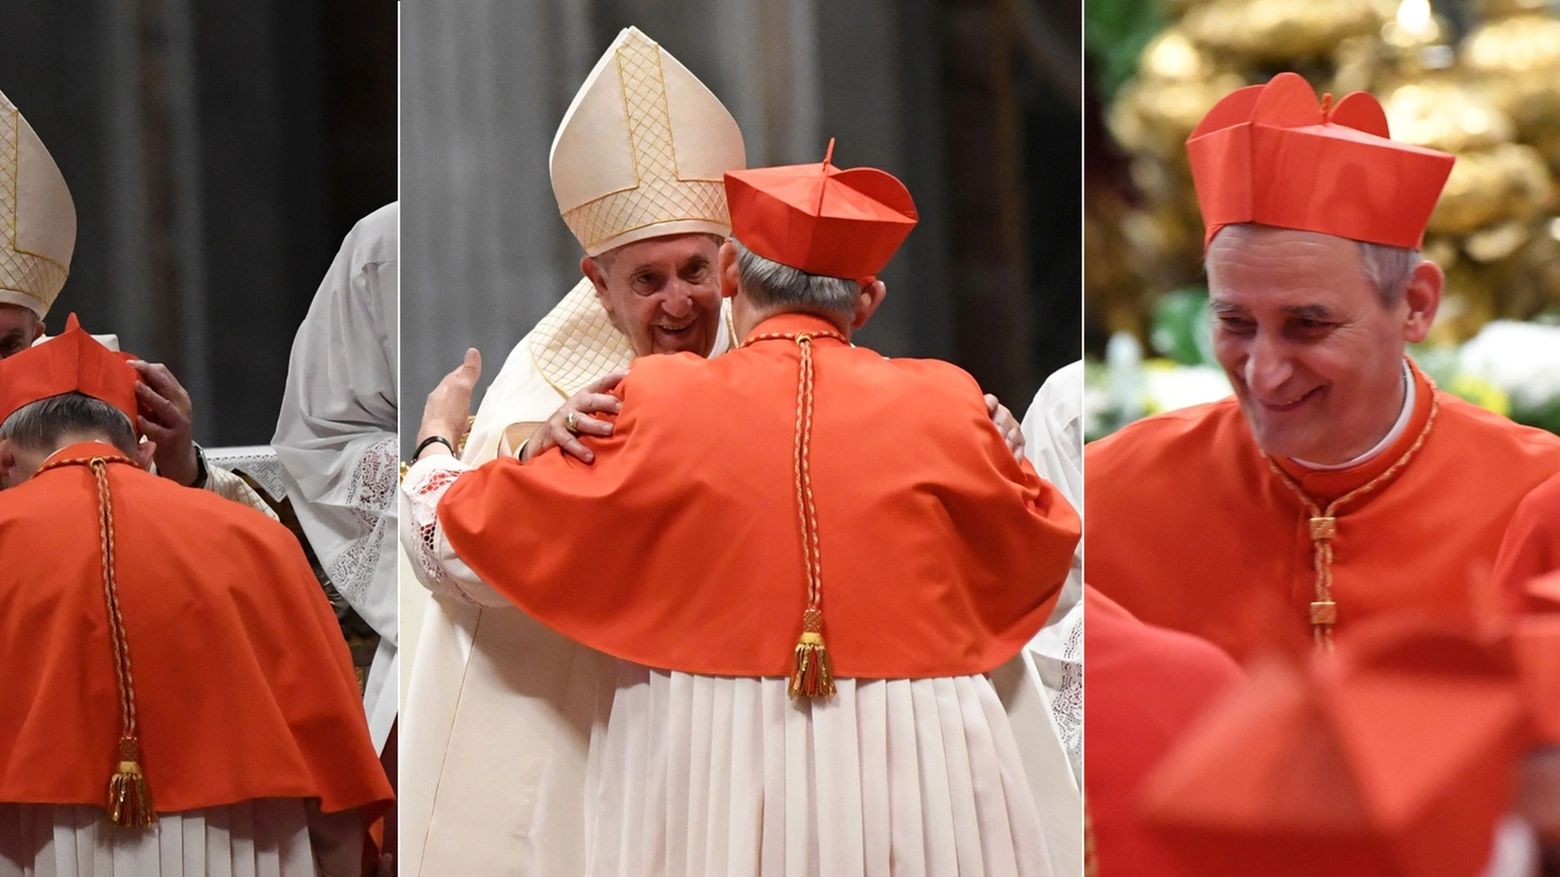 Il Papa nomina Matteo Zuppi cardinale (FotoSchicchi)